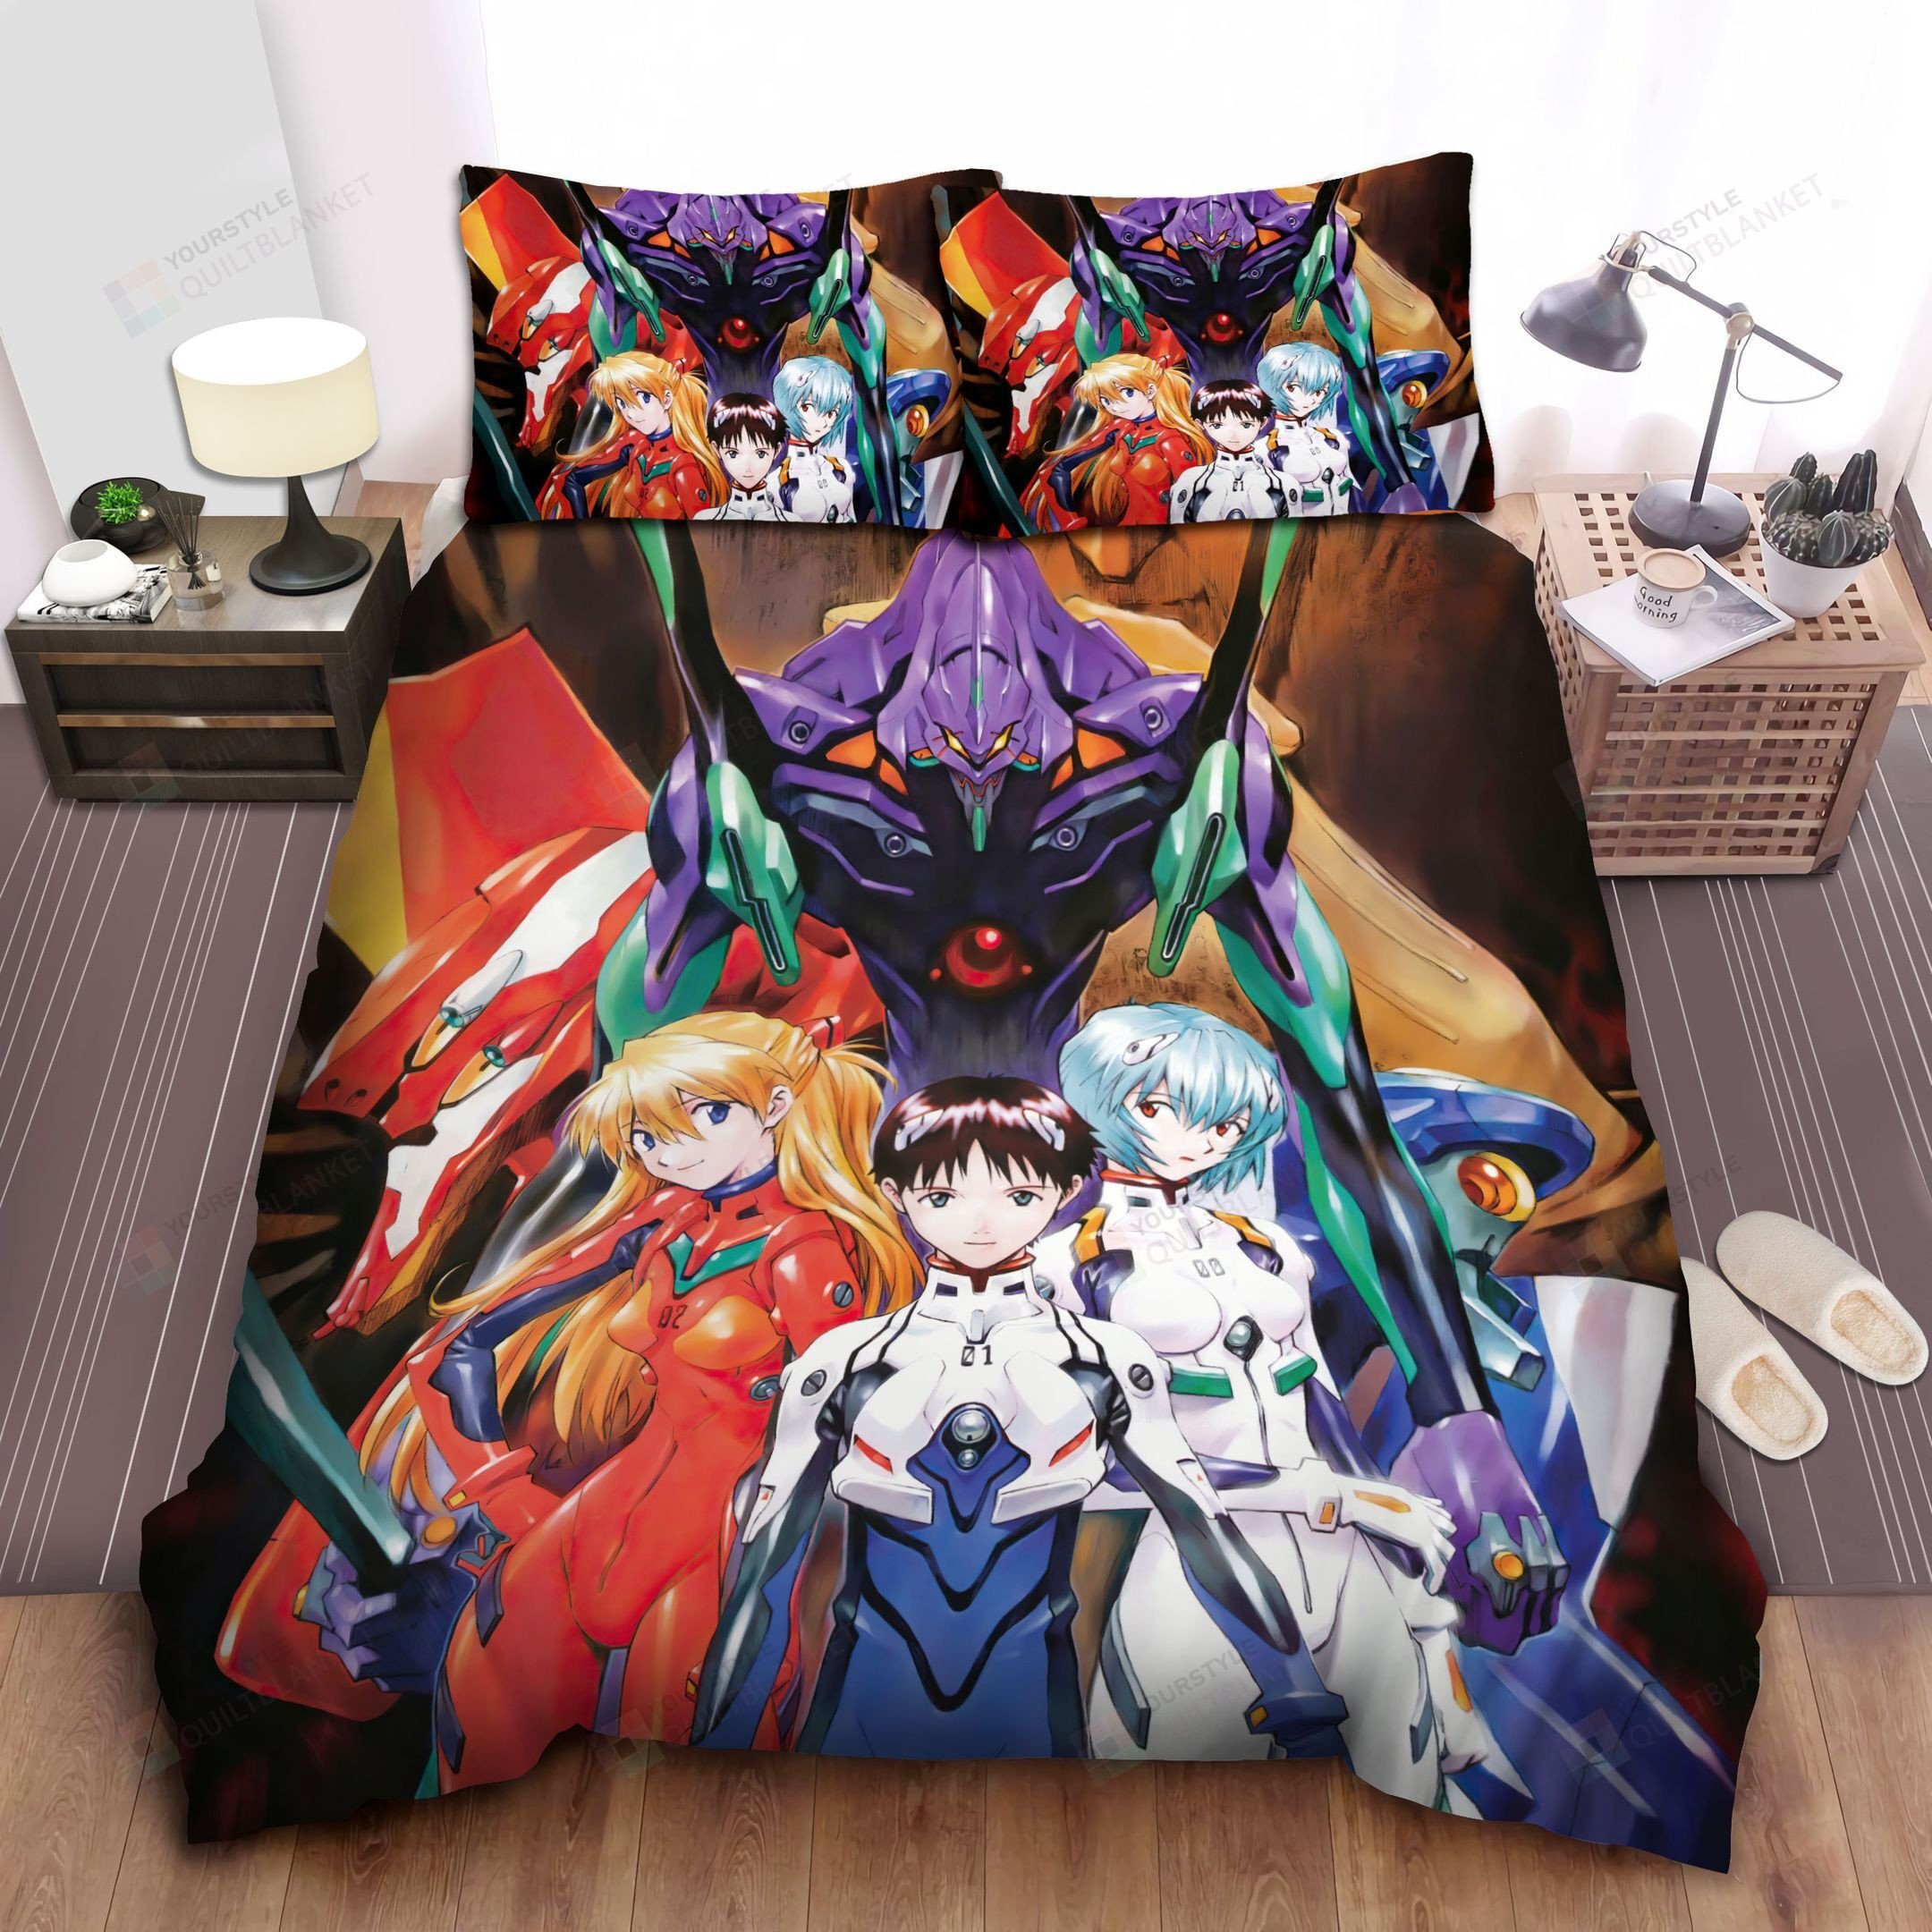 neon genesis evangelion original anime series poster bed sheets duvet cover bedding setswod87 - Evangelion Store